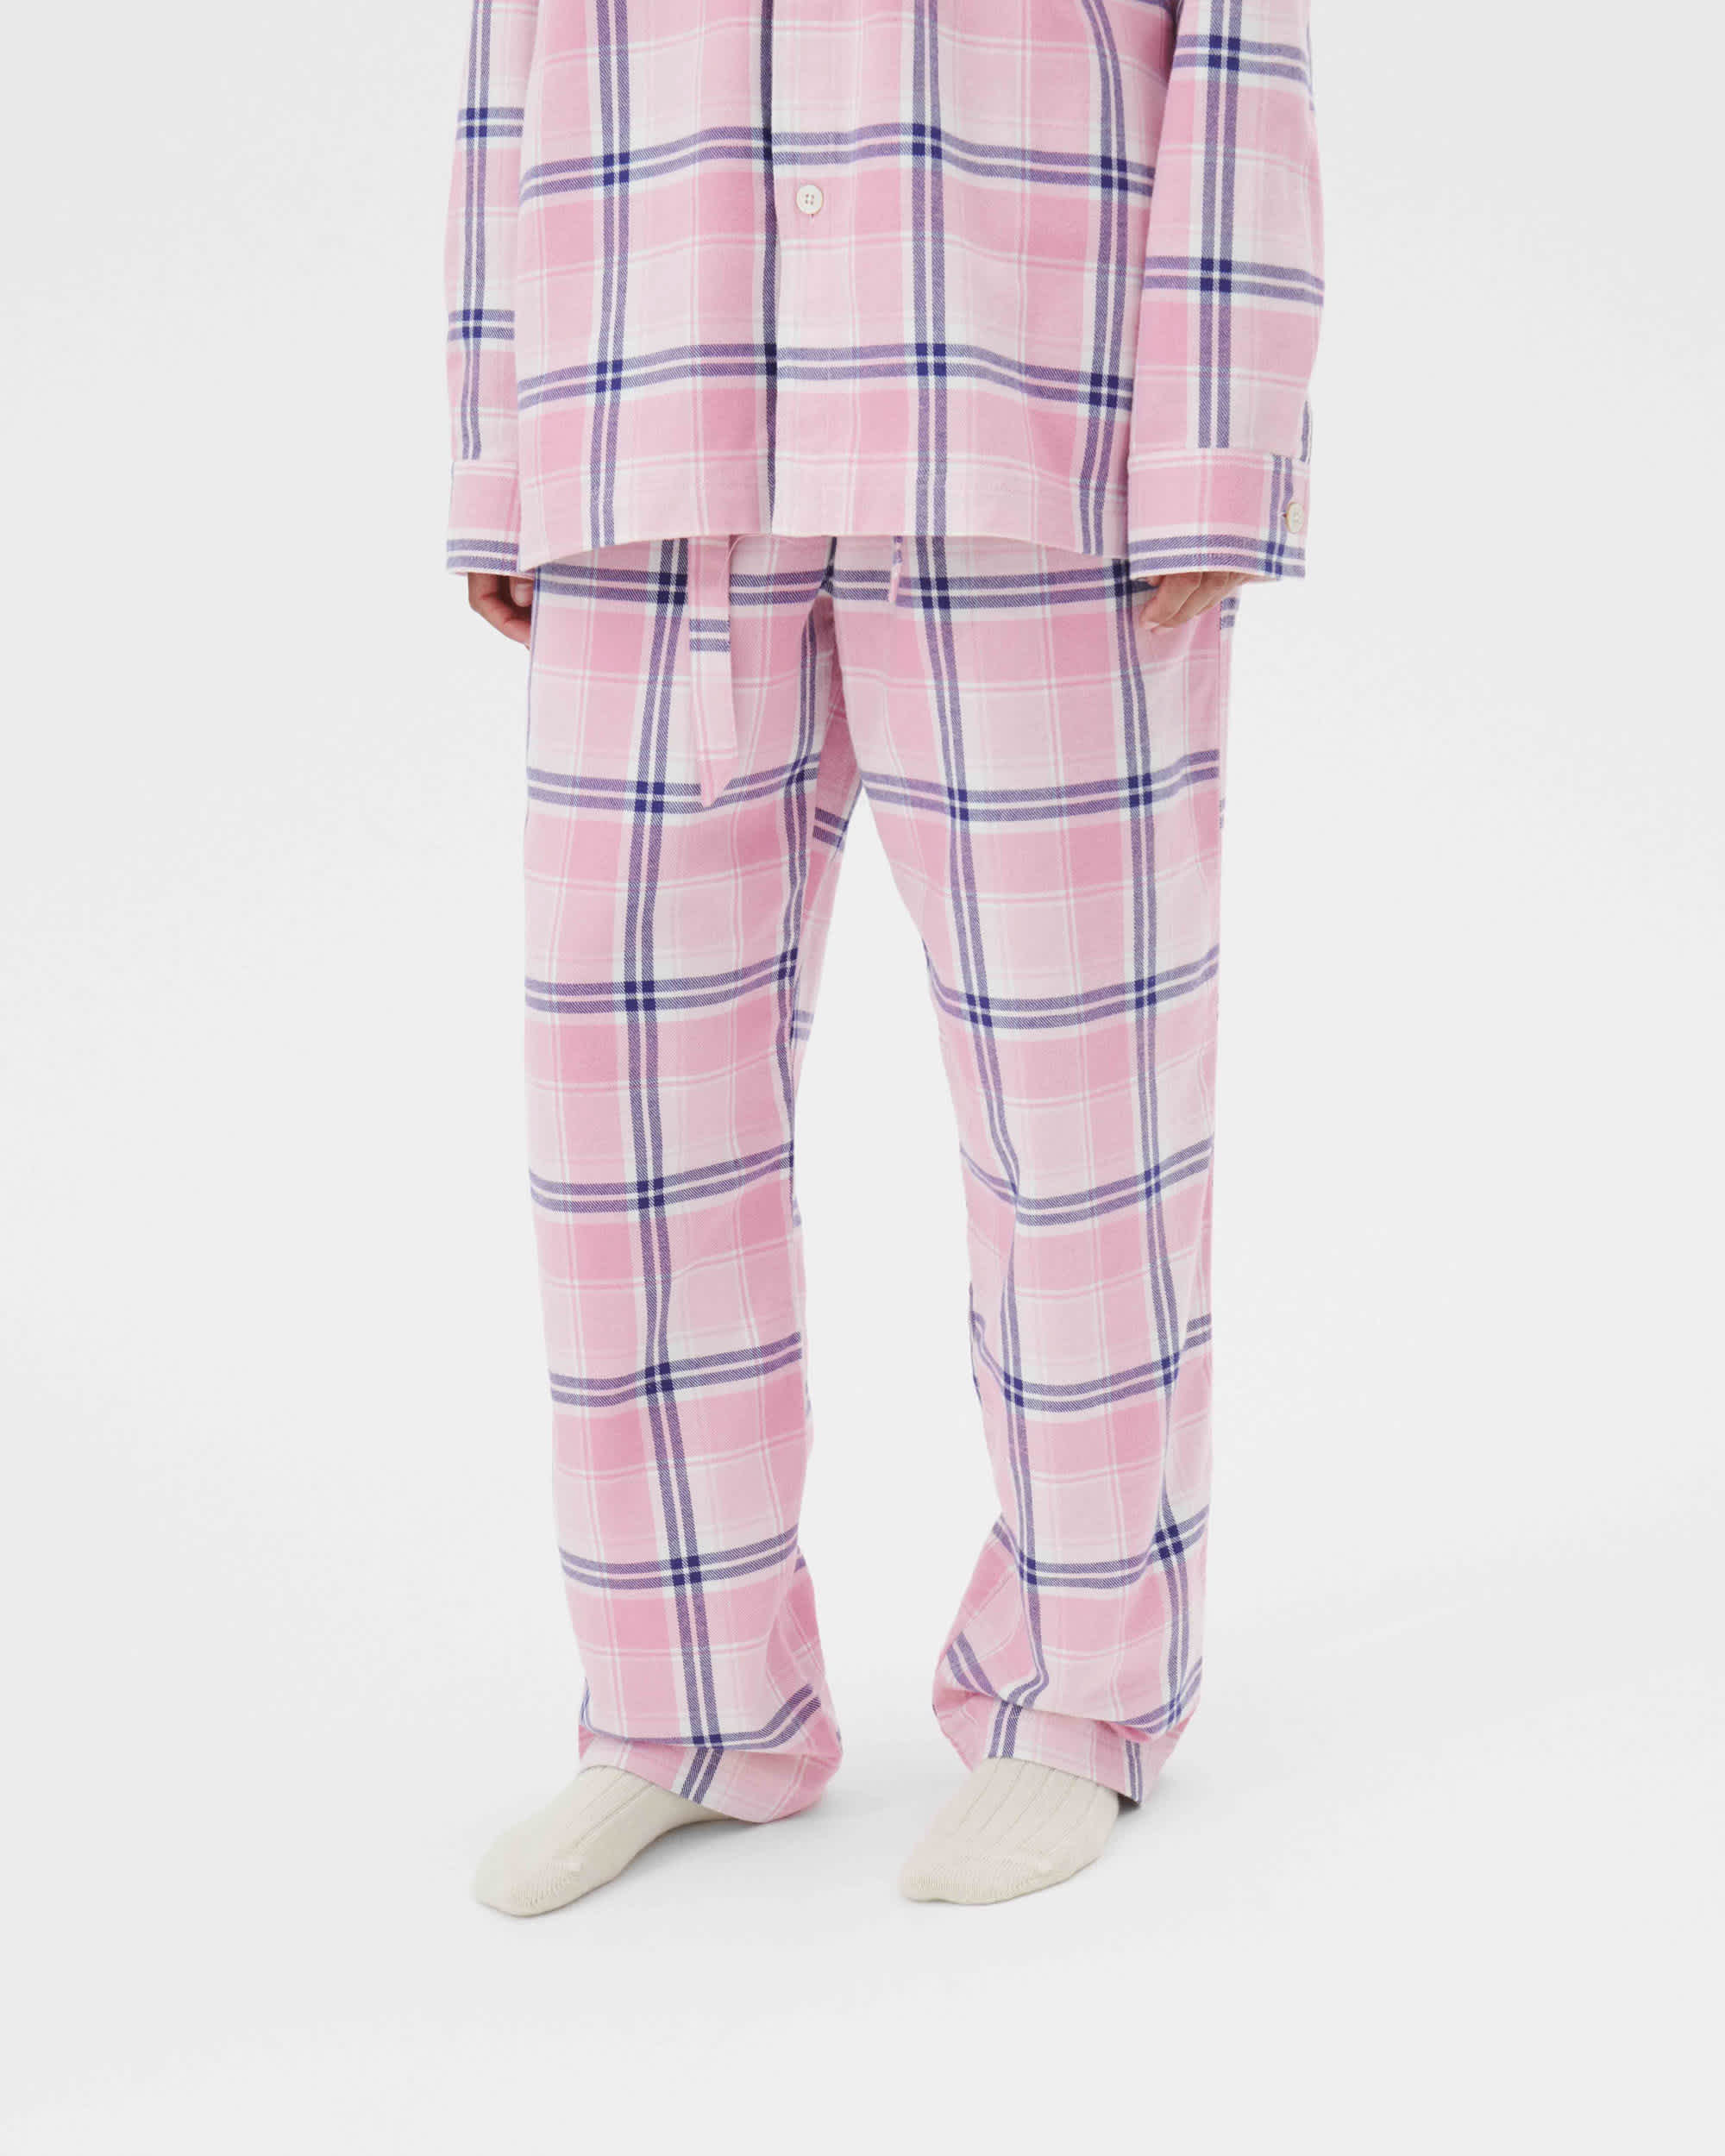 Women's Classic Pajama Pants - Pancake Bay Plaid Flannel– 49th Apparel